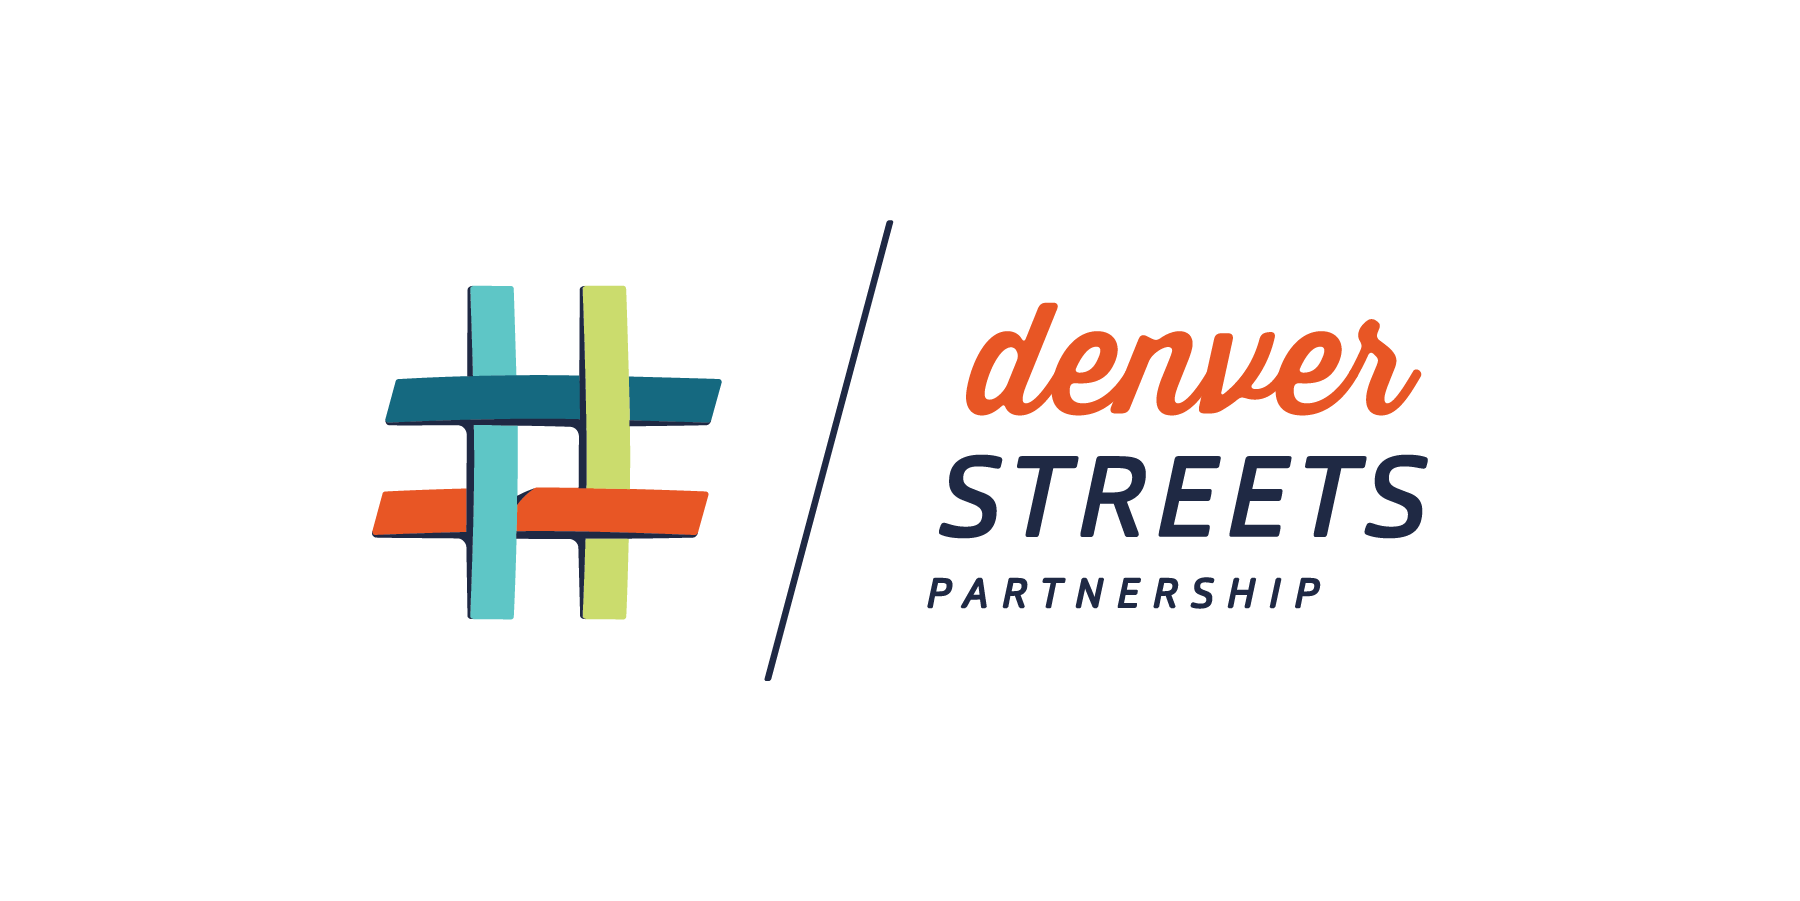 Denver Streets Partnership logo